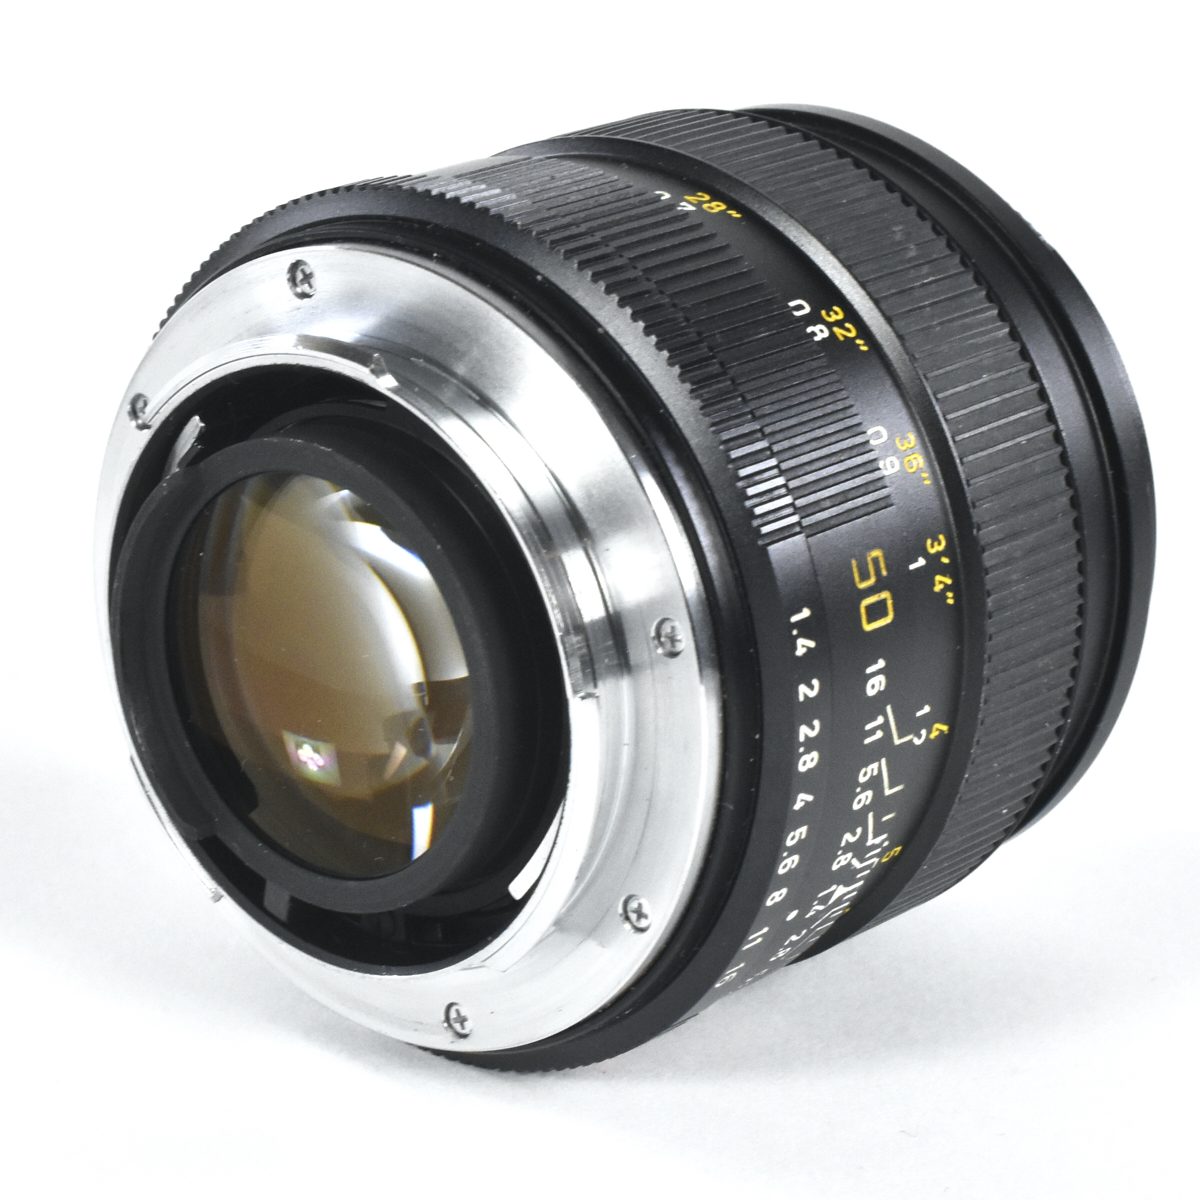 Leitz SummiLux-R 1:1.4/50 Camera Lens with B+W Polarizing Filter - Image 5 of 9